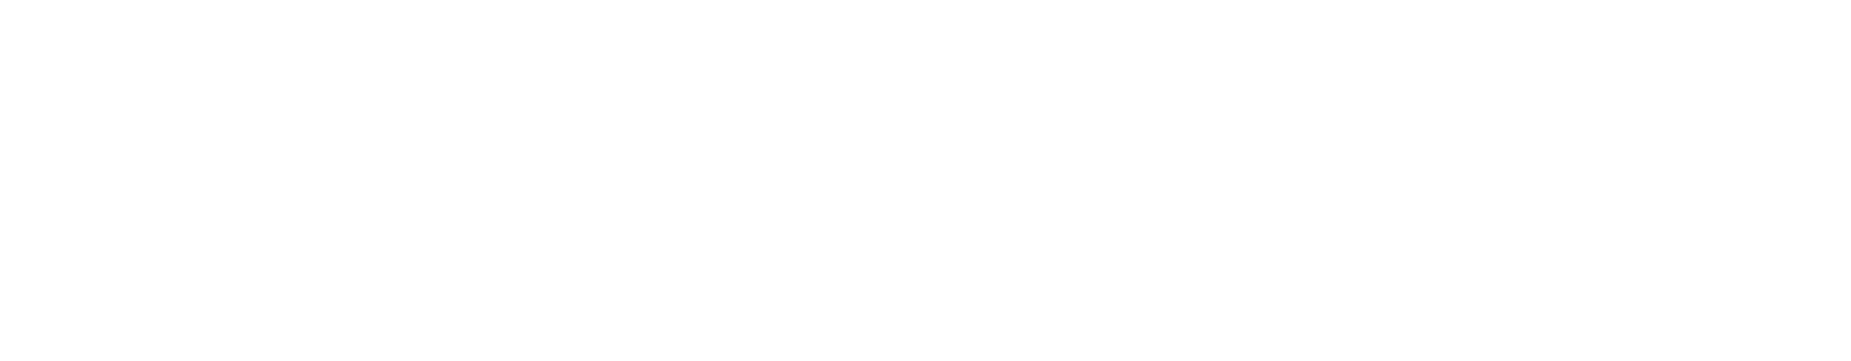 Christian Home Educators Association (CHEA) of California, Inc.